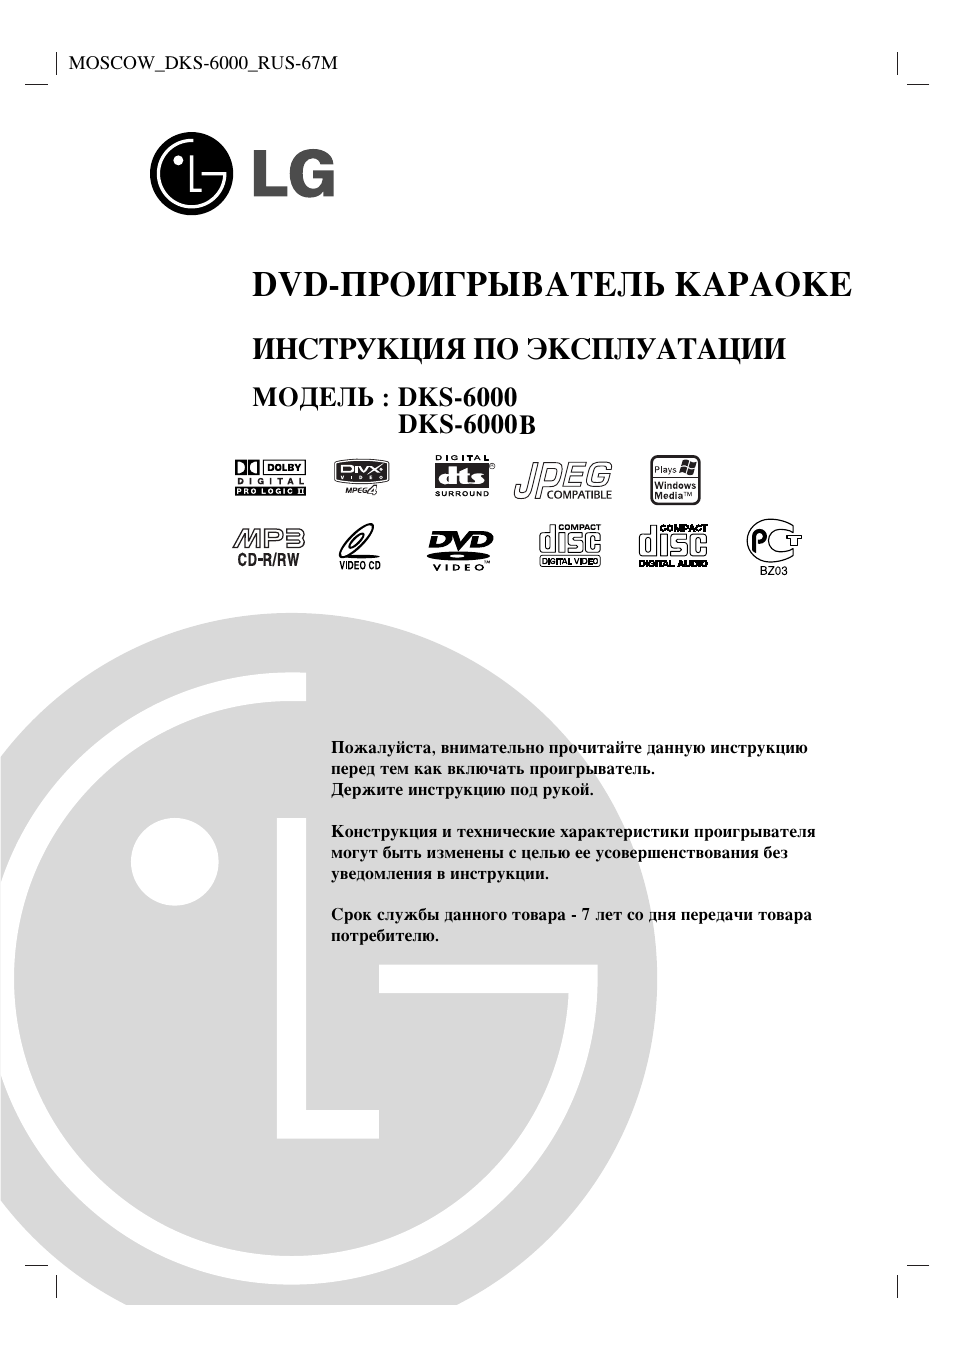 Инструкция по эксплуатации LG DKS-6000B | 35 страниц